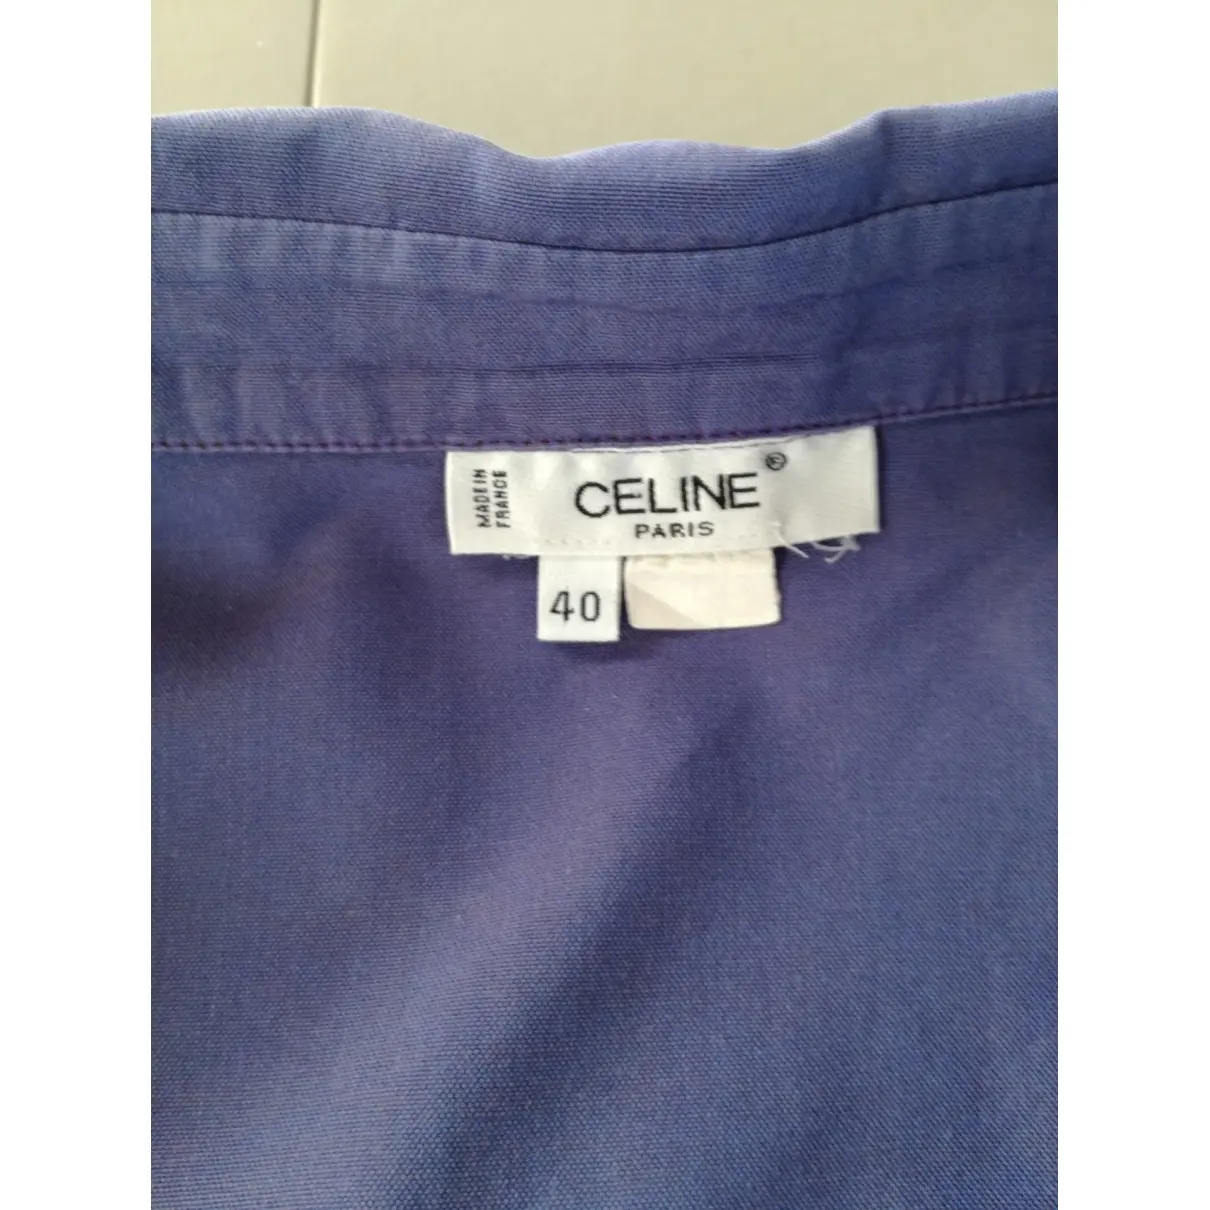 Buy Celine Purple Cotton Top online - Vintage